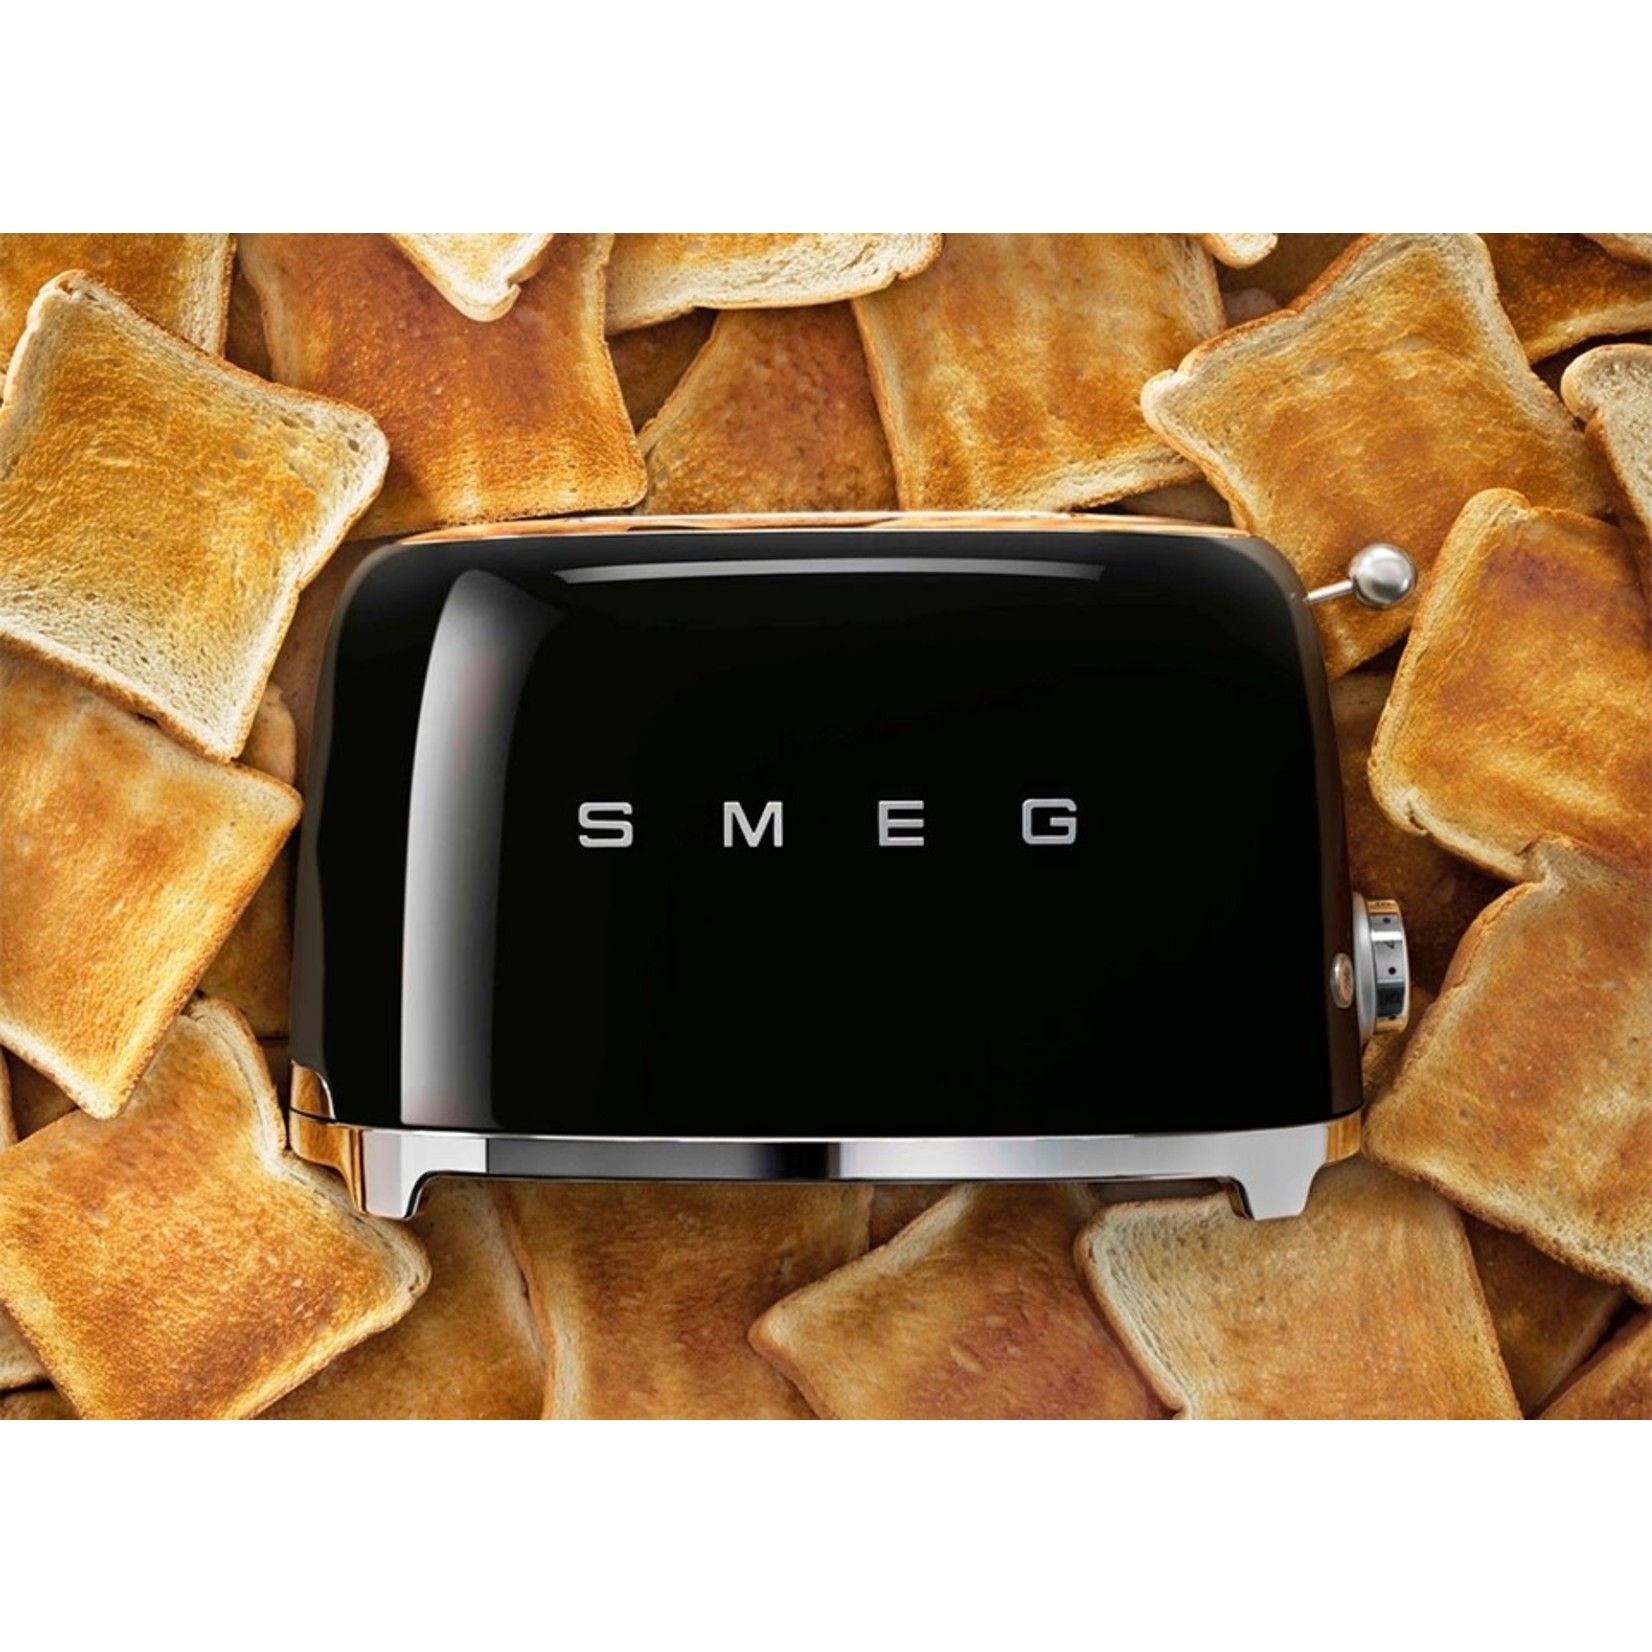 50's Retro 2-Slice Toaster - Rose Gold, SMEG